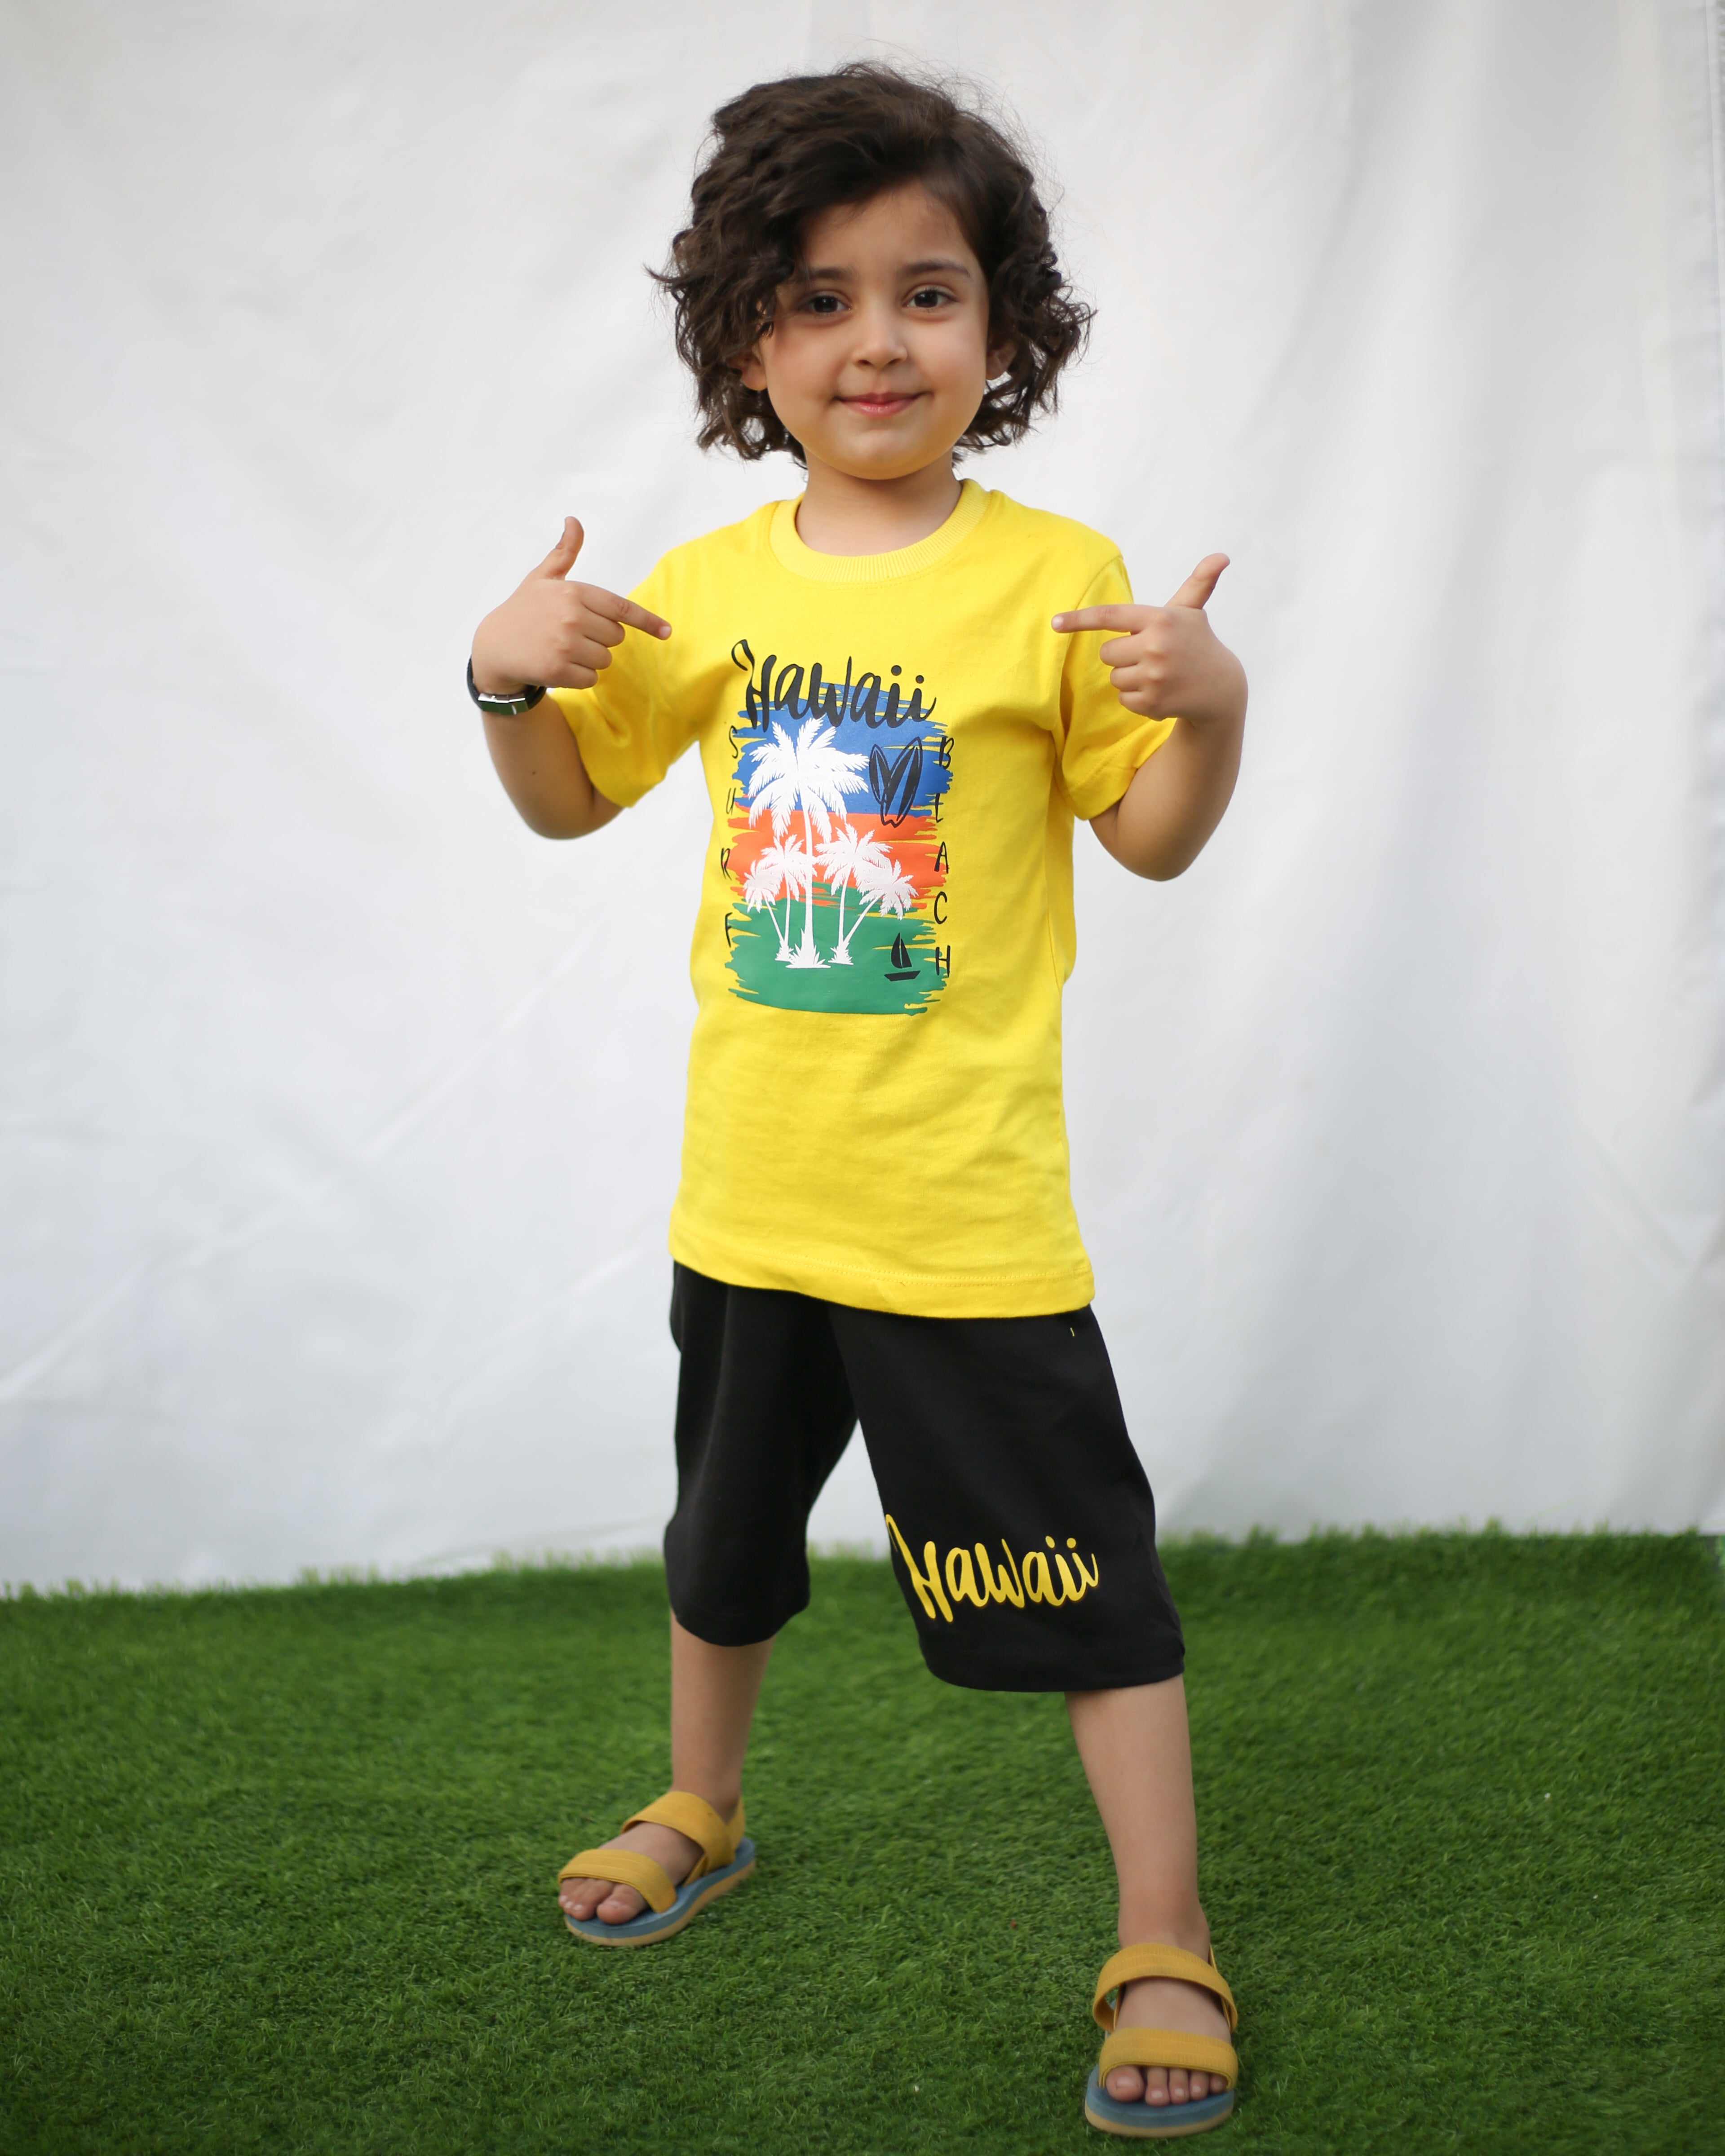 Hawaii Printed Yellow T-Shirt And Shorts For Kids